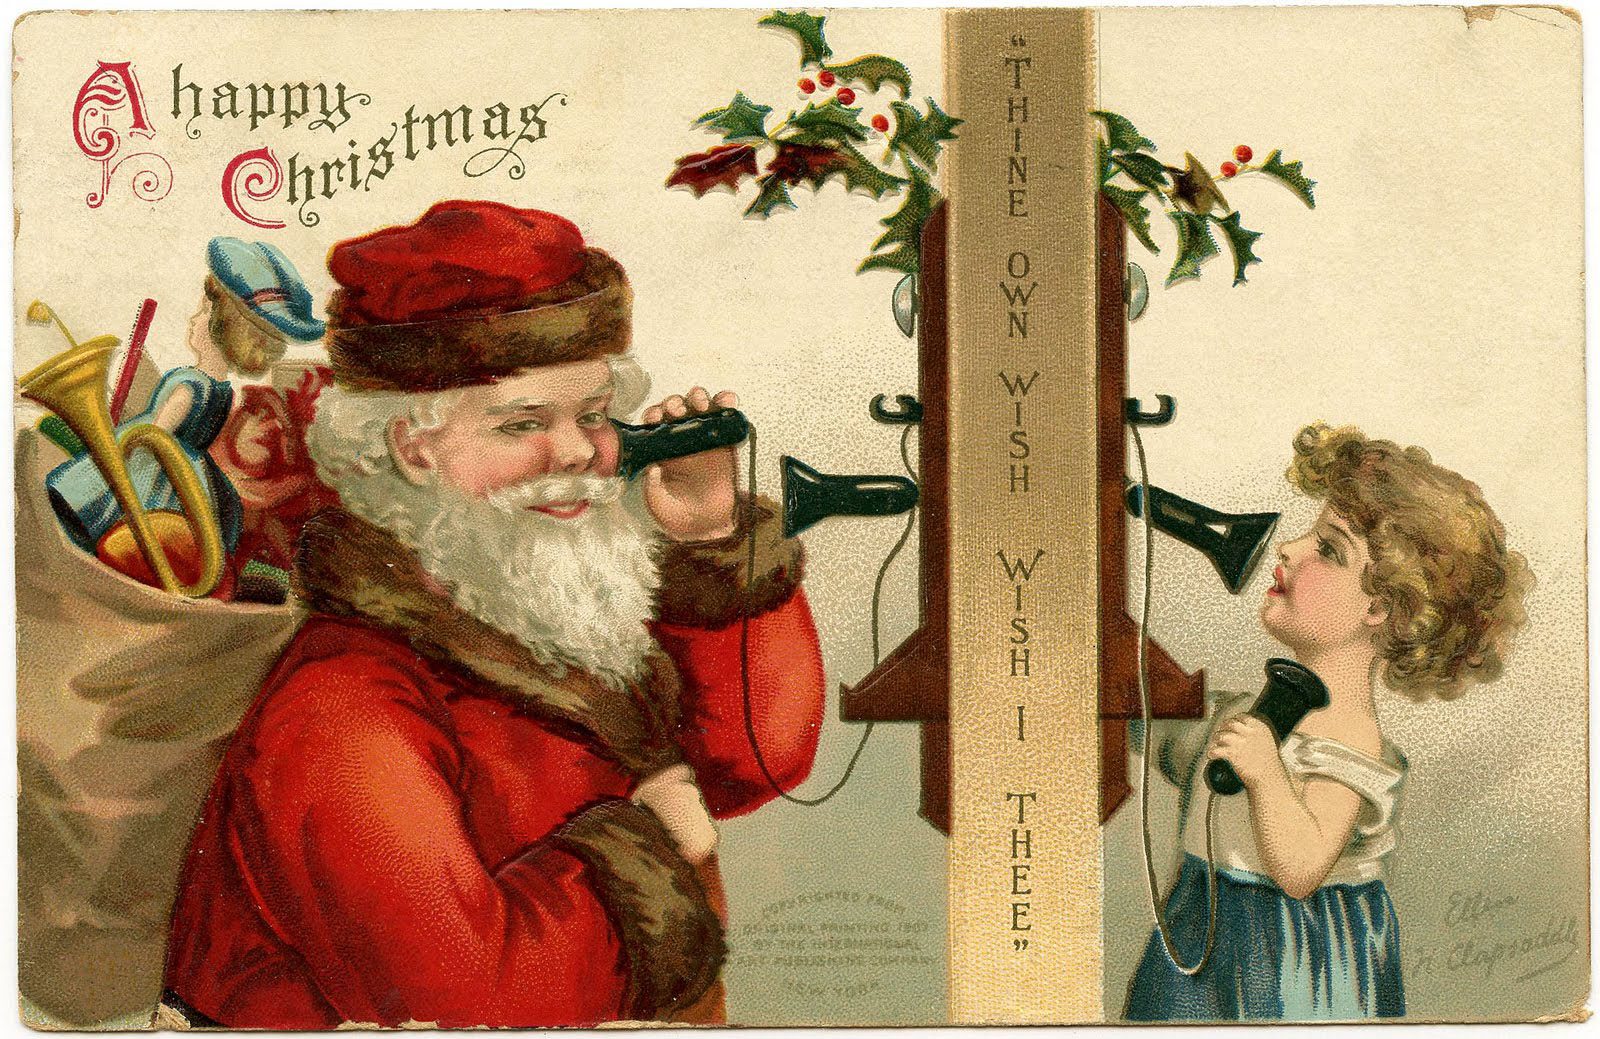 Vintage Santa Phone Call Images.